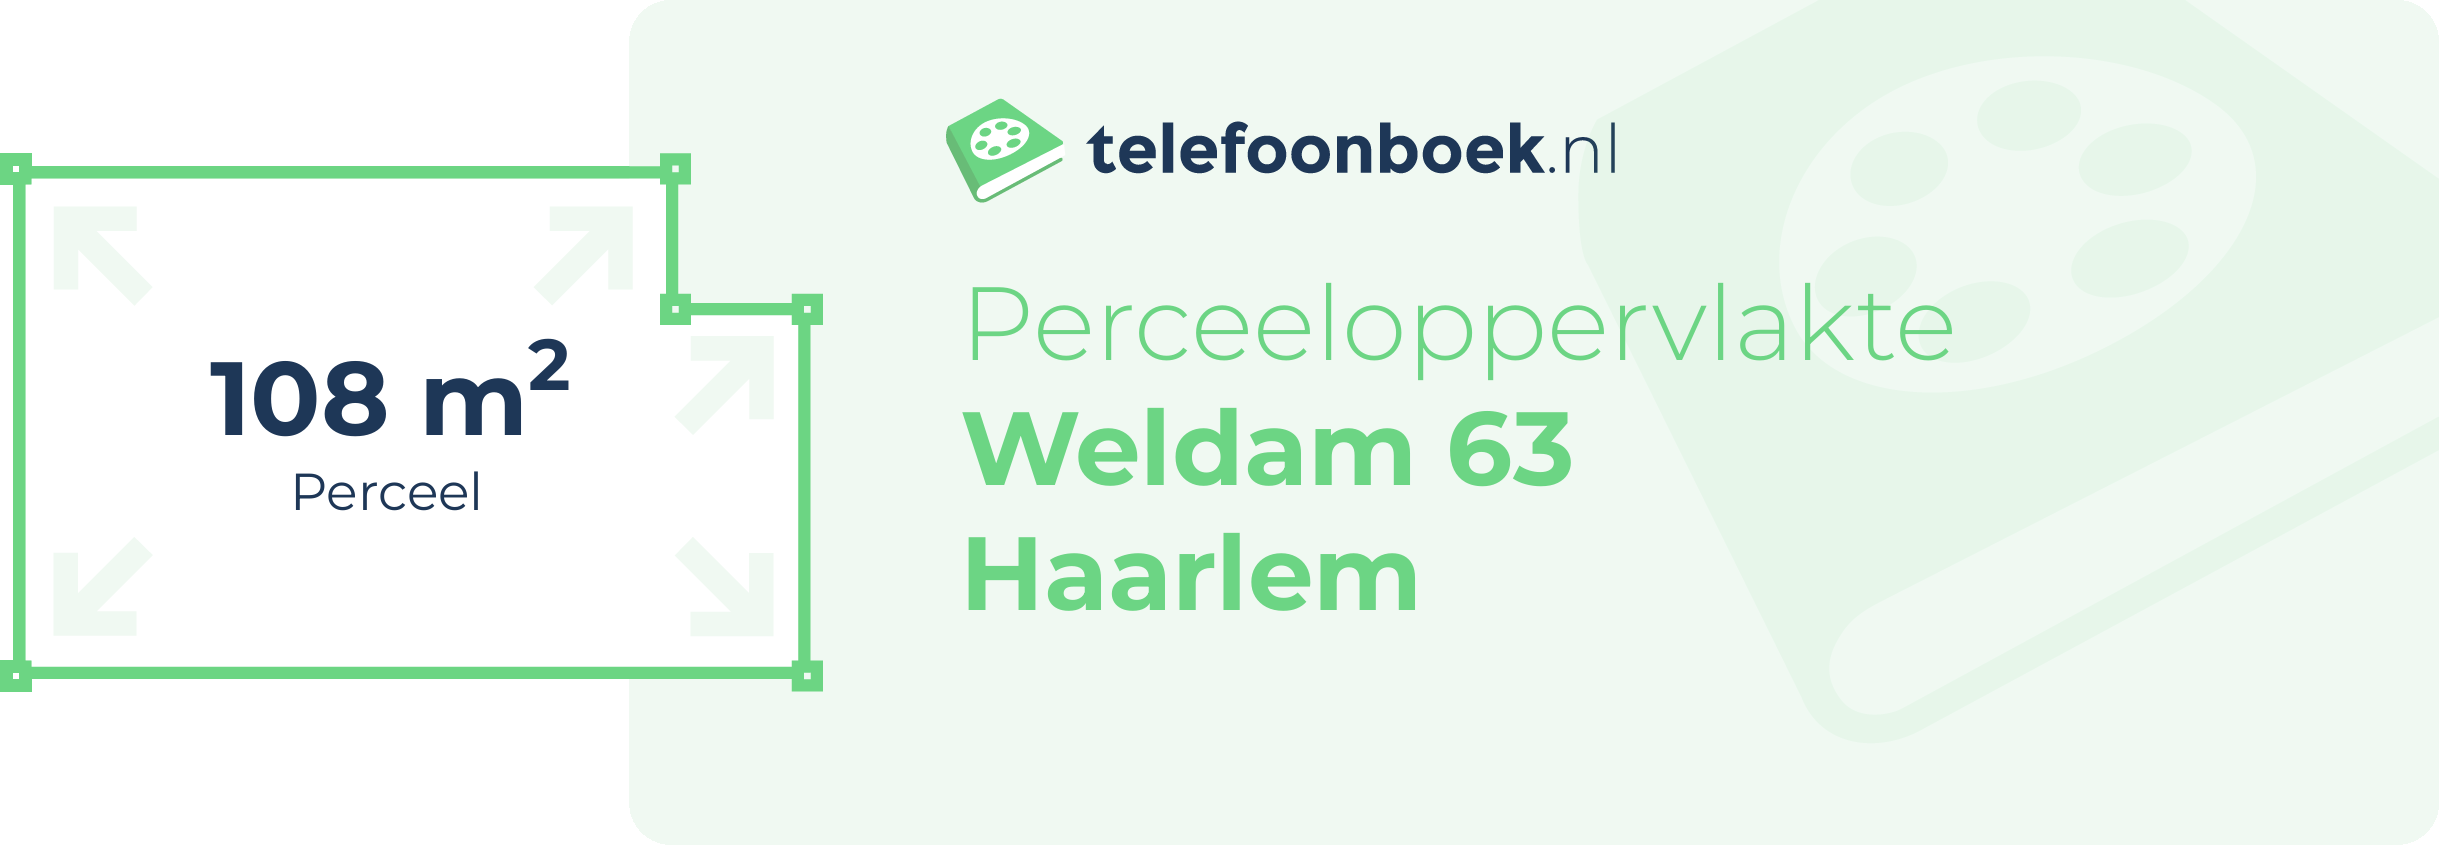 Perceeloppervlakte Weldam 63 Haarlem